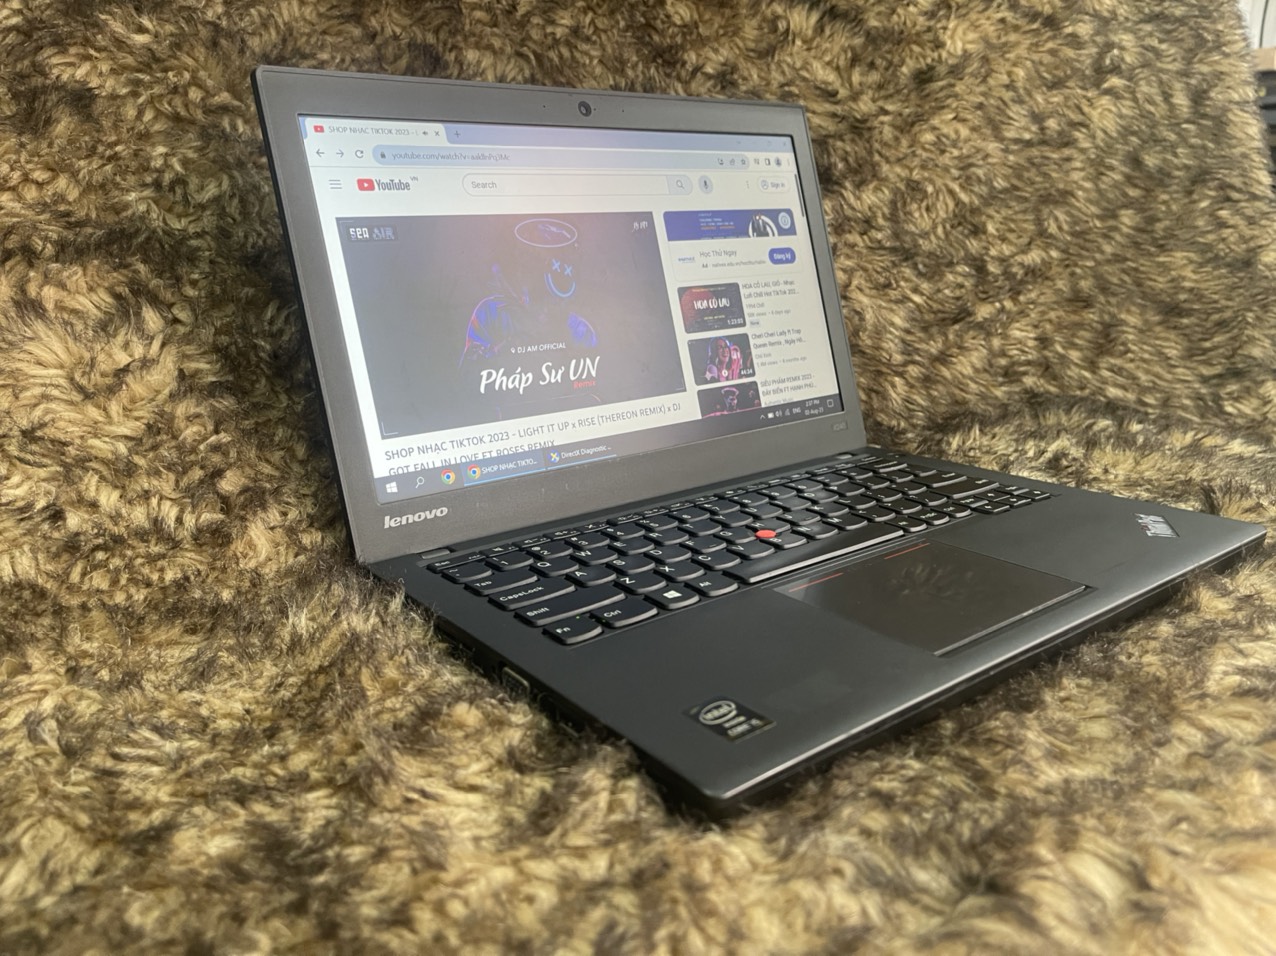 Cần bán Laptop Lenovo X240 Mỏng nhẹ